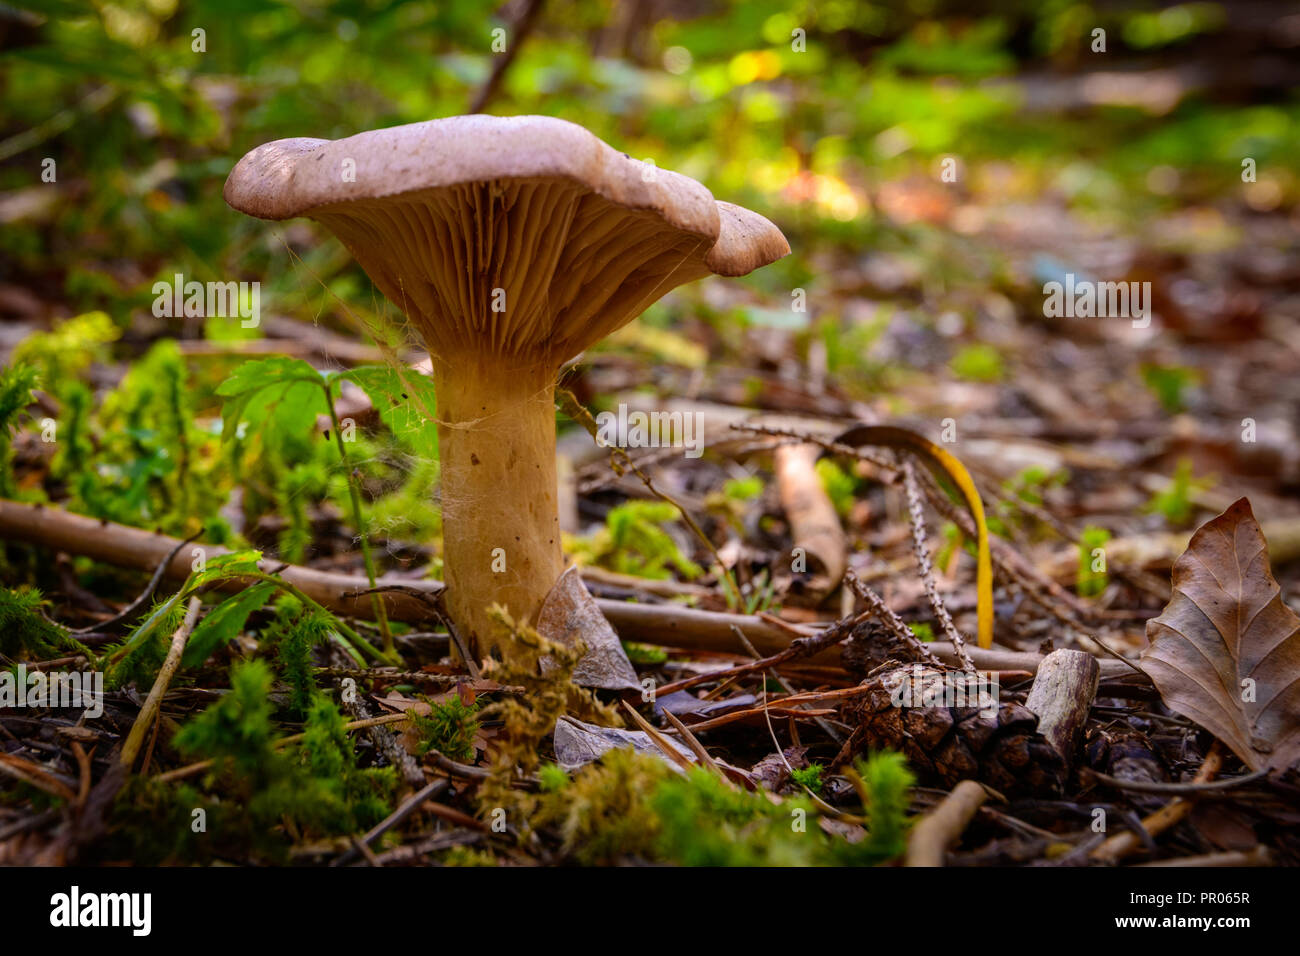 Mushroom on forest floor, close up Stock Photo